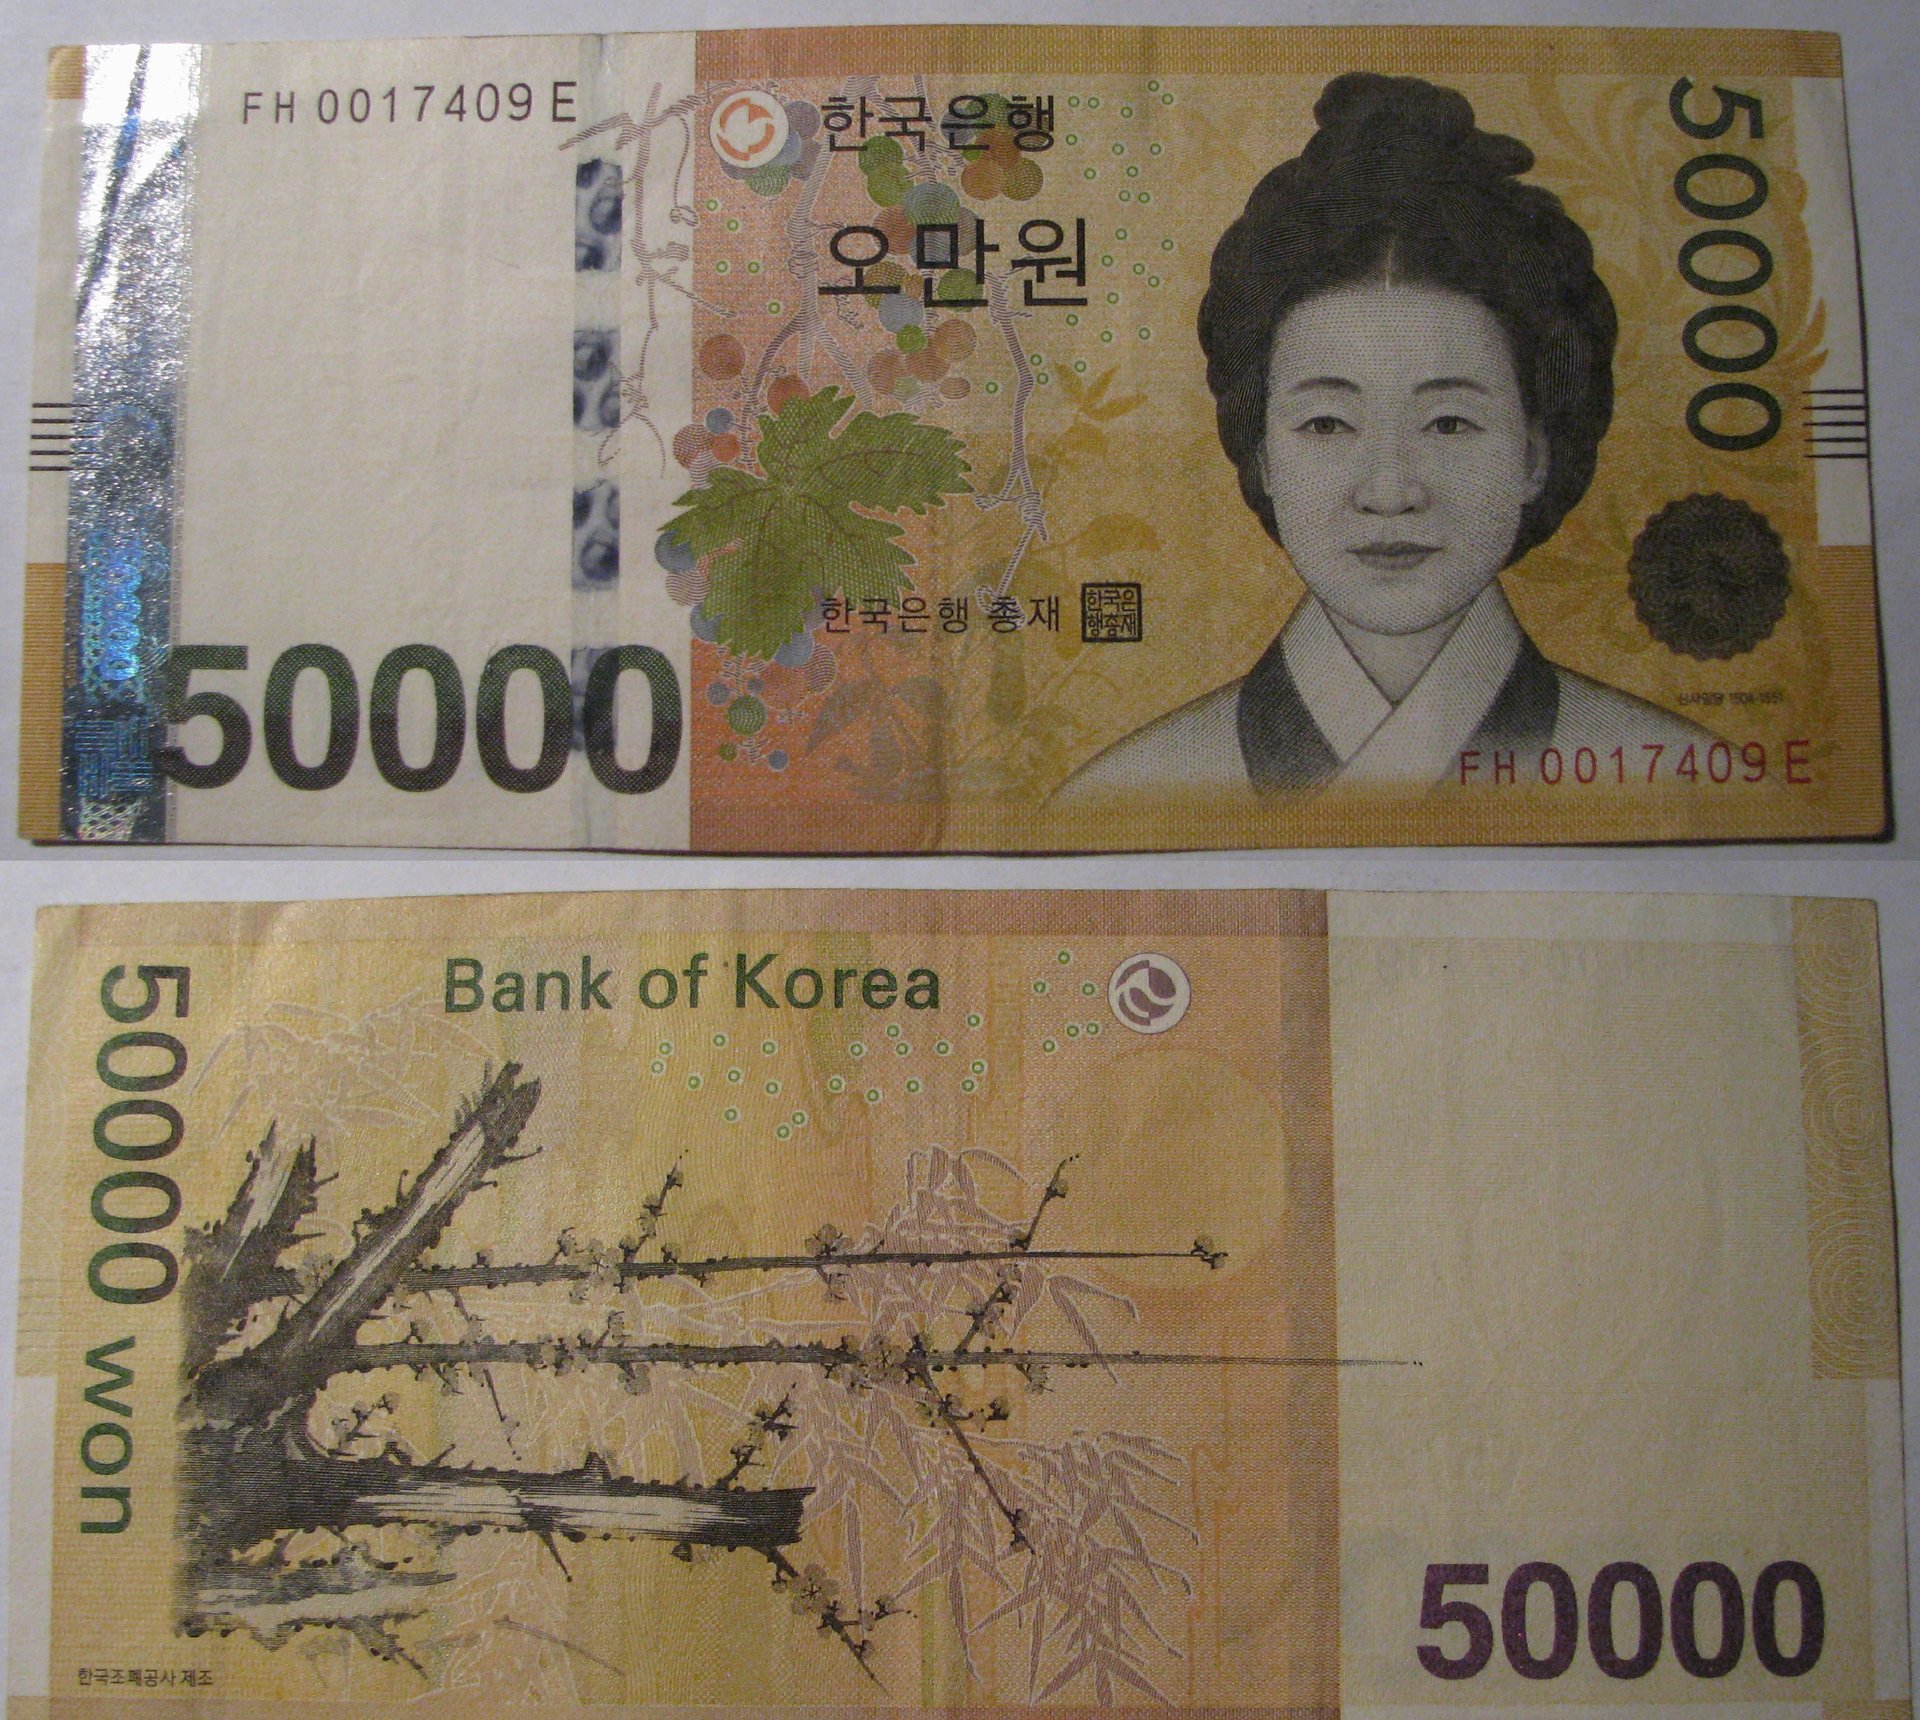 South Korea 50000 Won Note.jpg